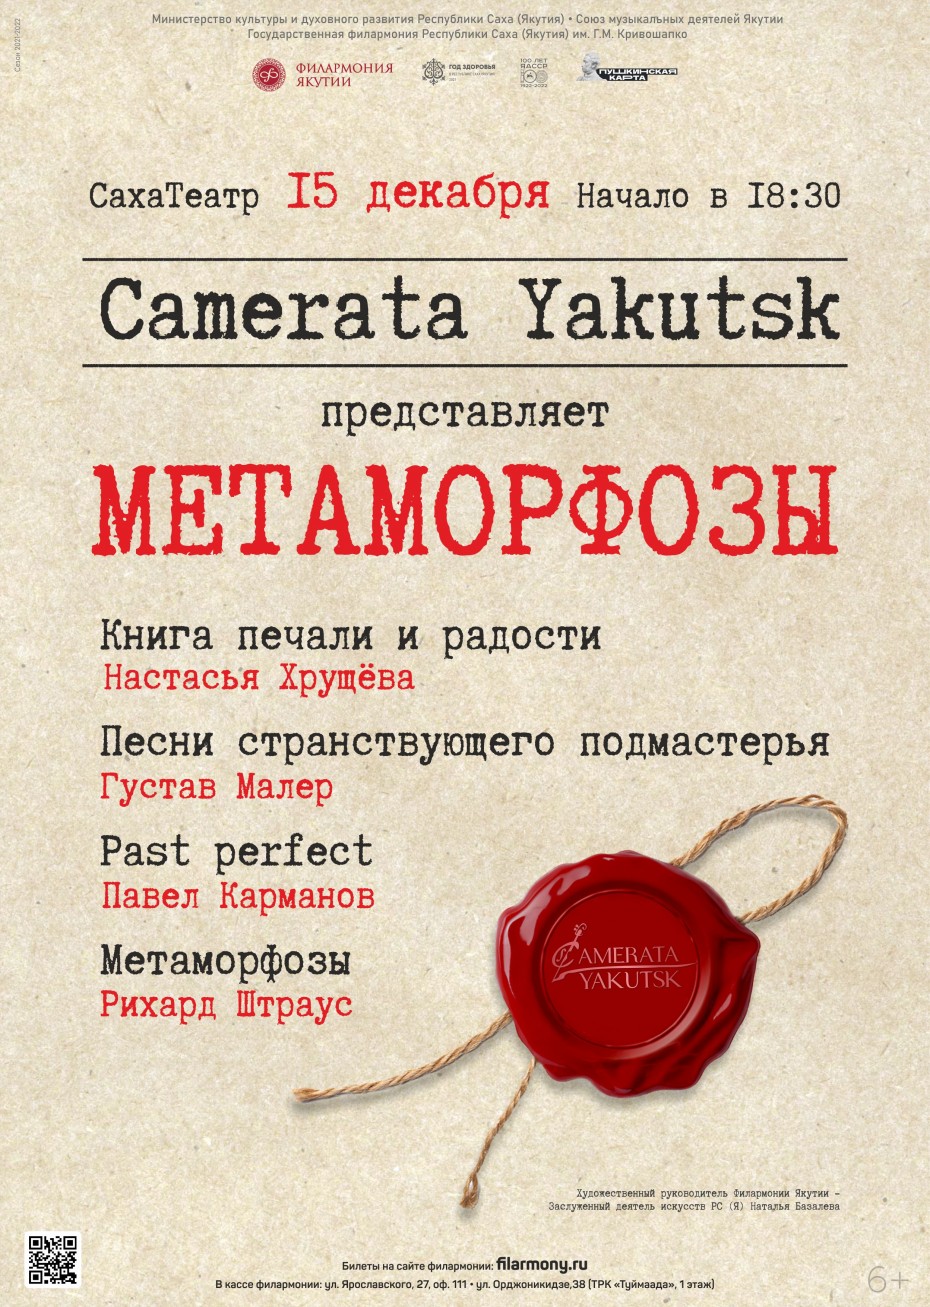 Camerata Yakutsk  представит программу "Метаморфозы"